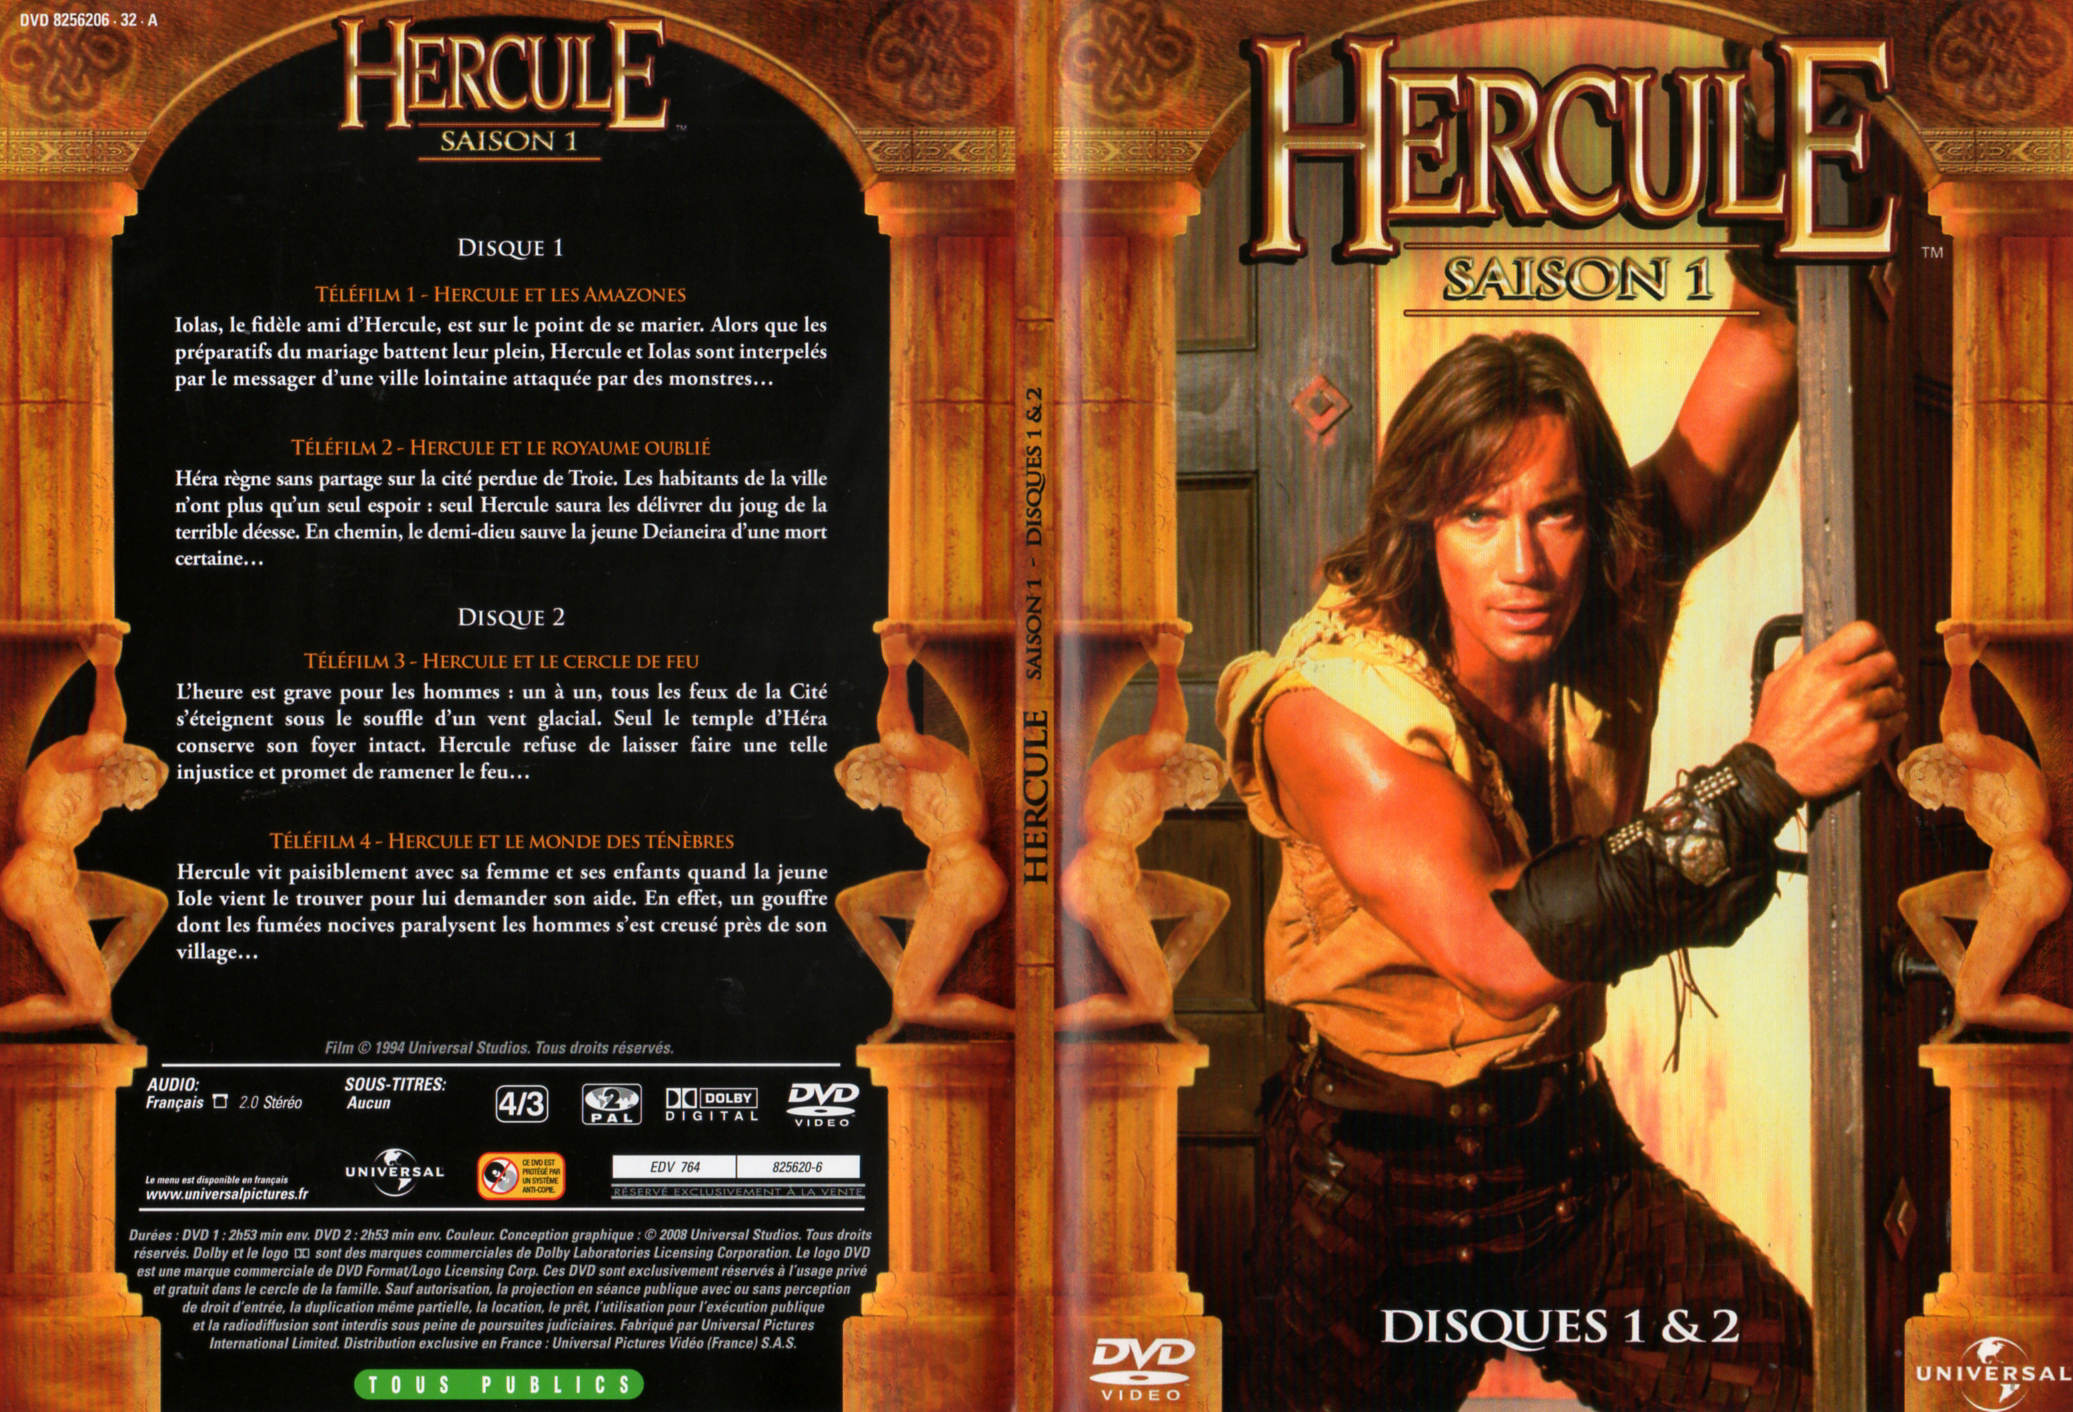 Jaquette DVD Hercule Saison 1 DVD 1